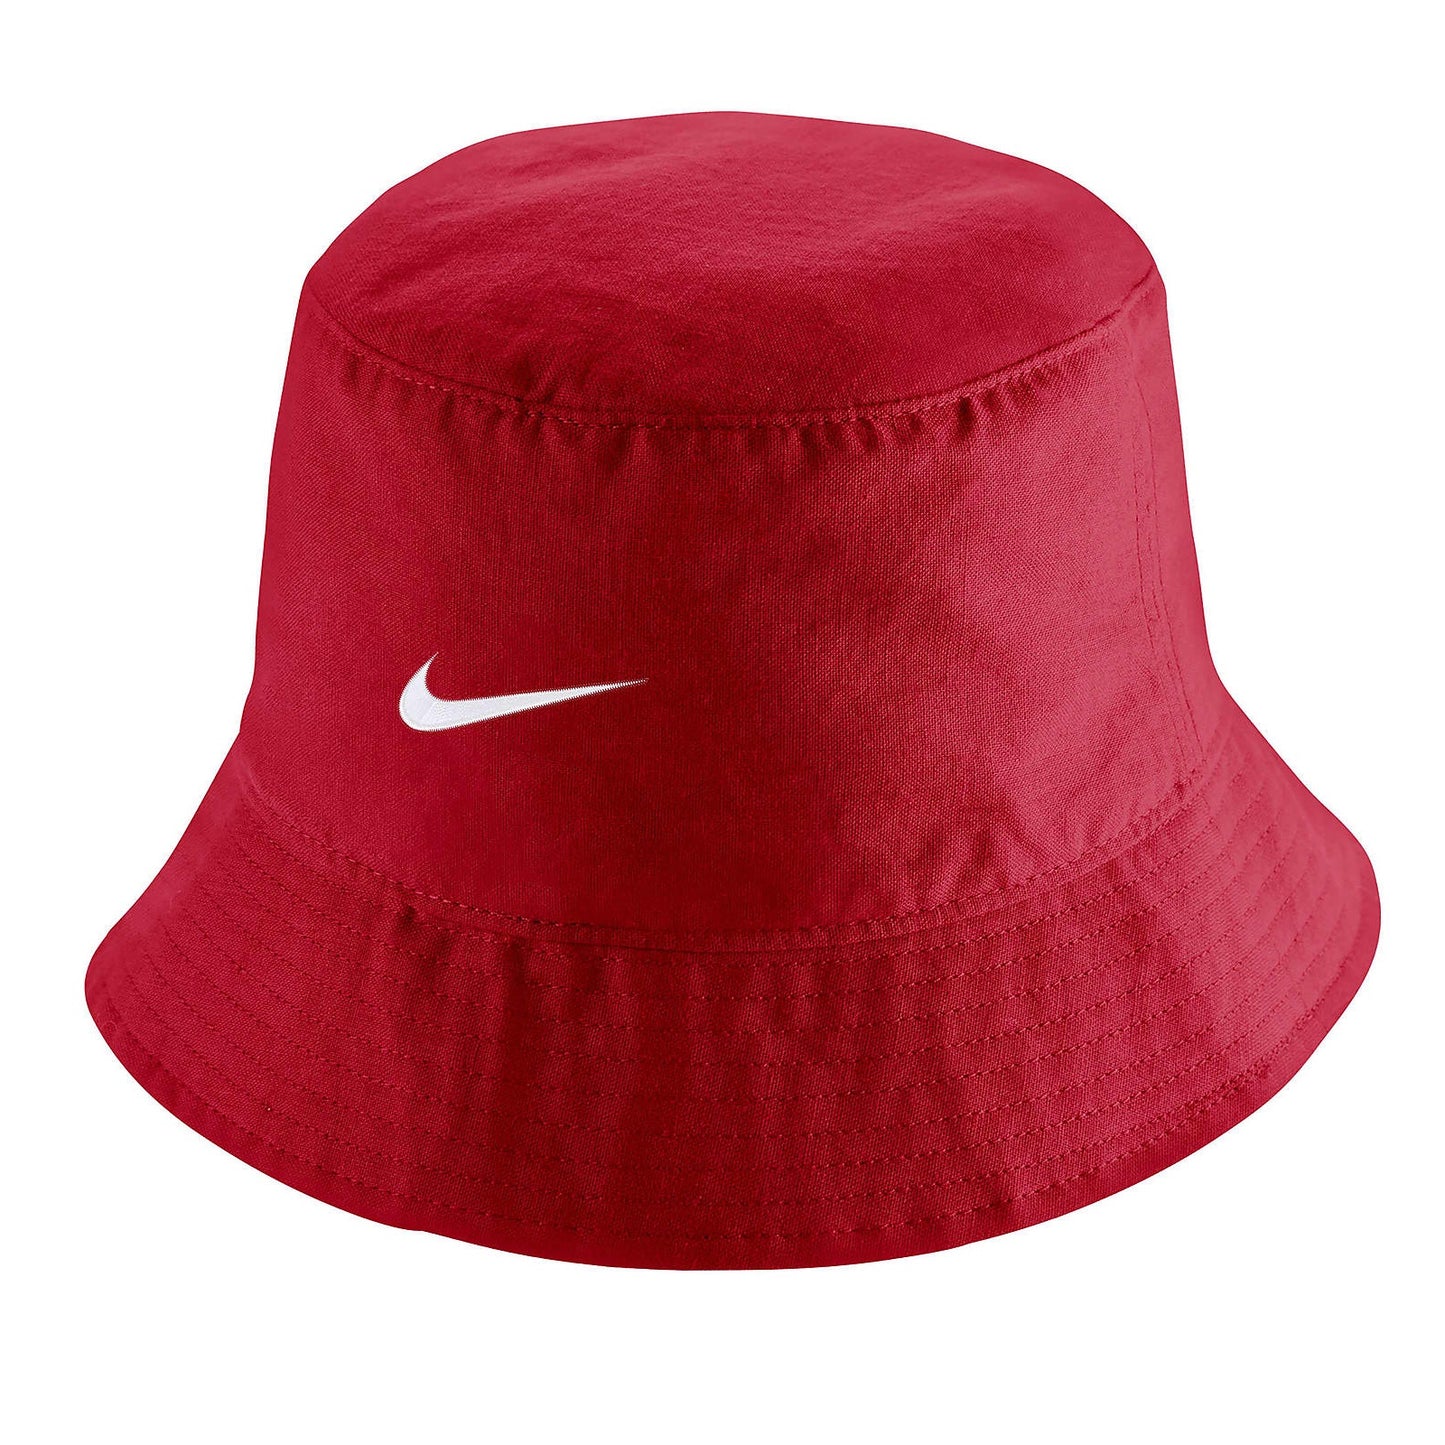 Canada 2022/23 Core Bucket Hat